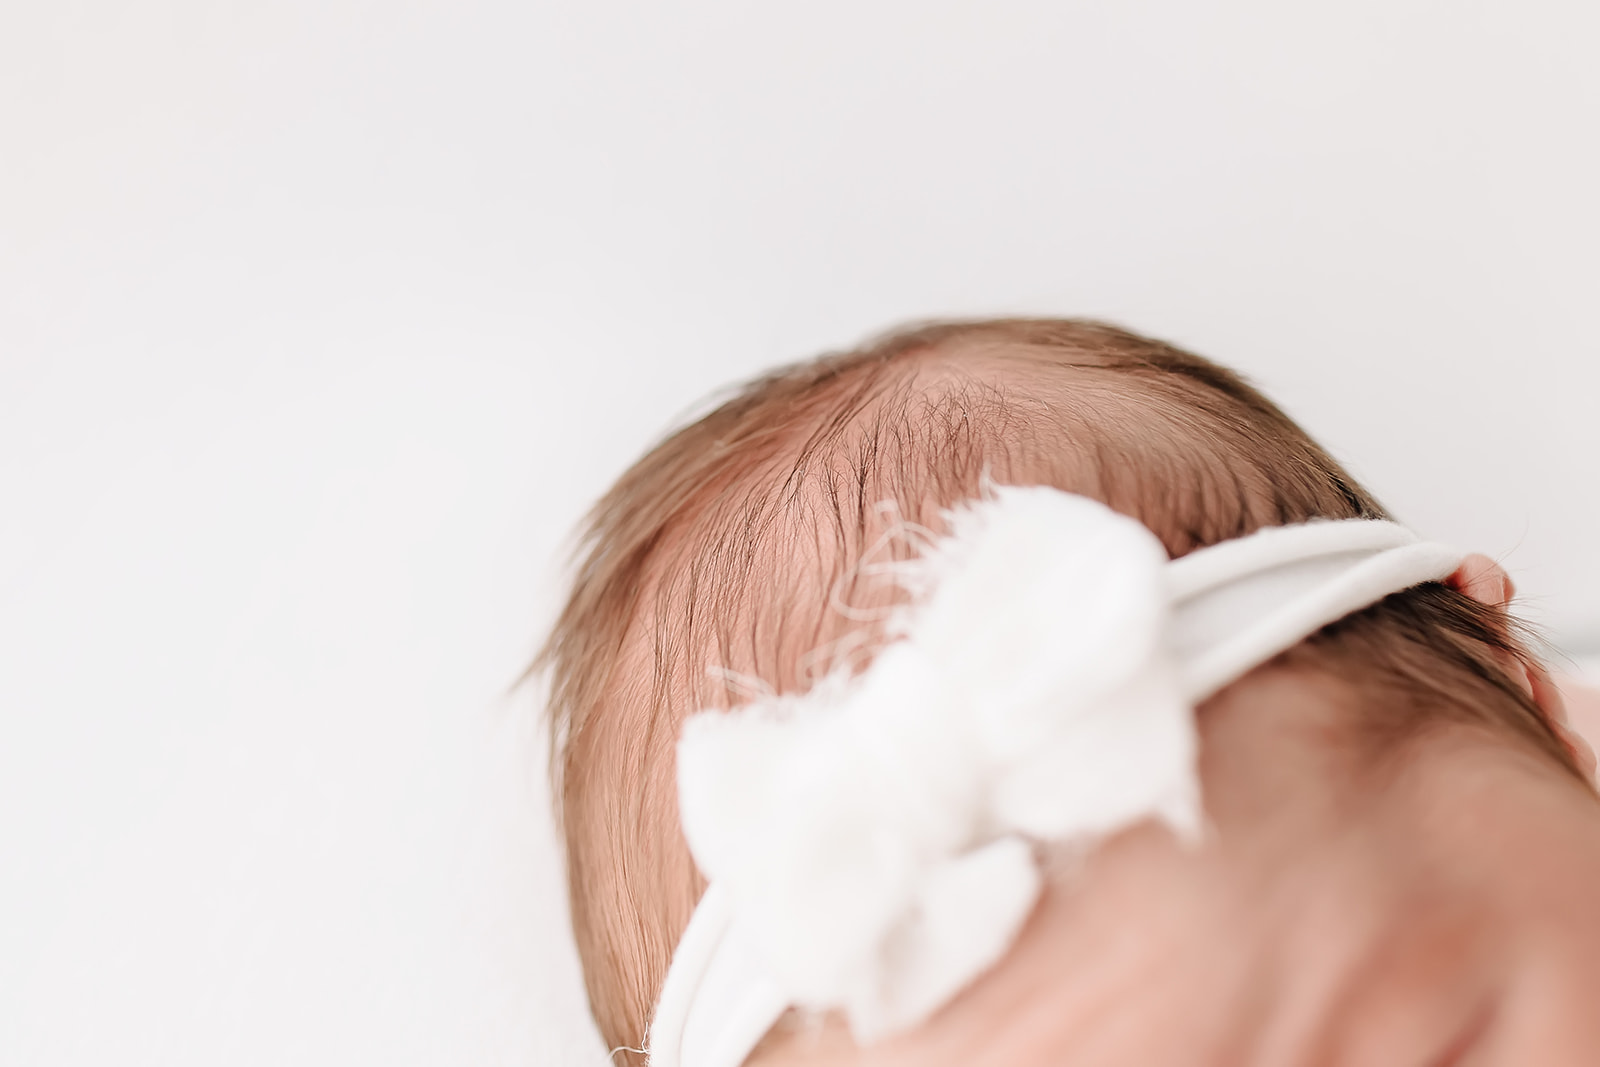 A newborn baby wears a white bow headband